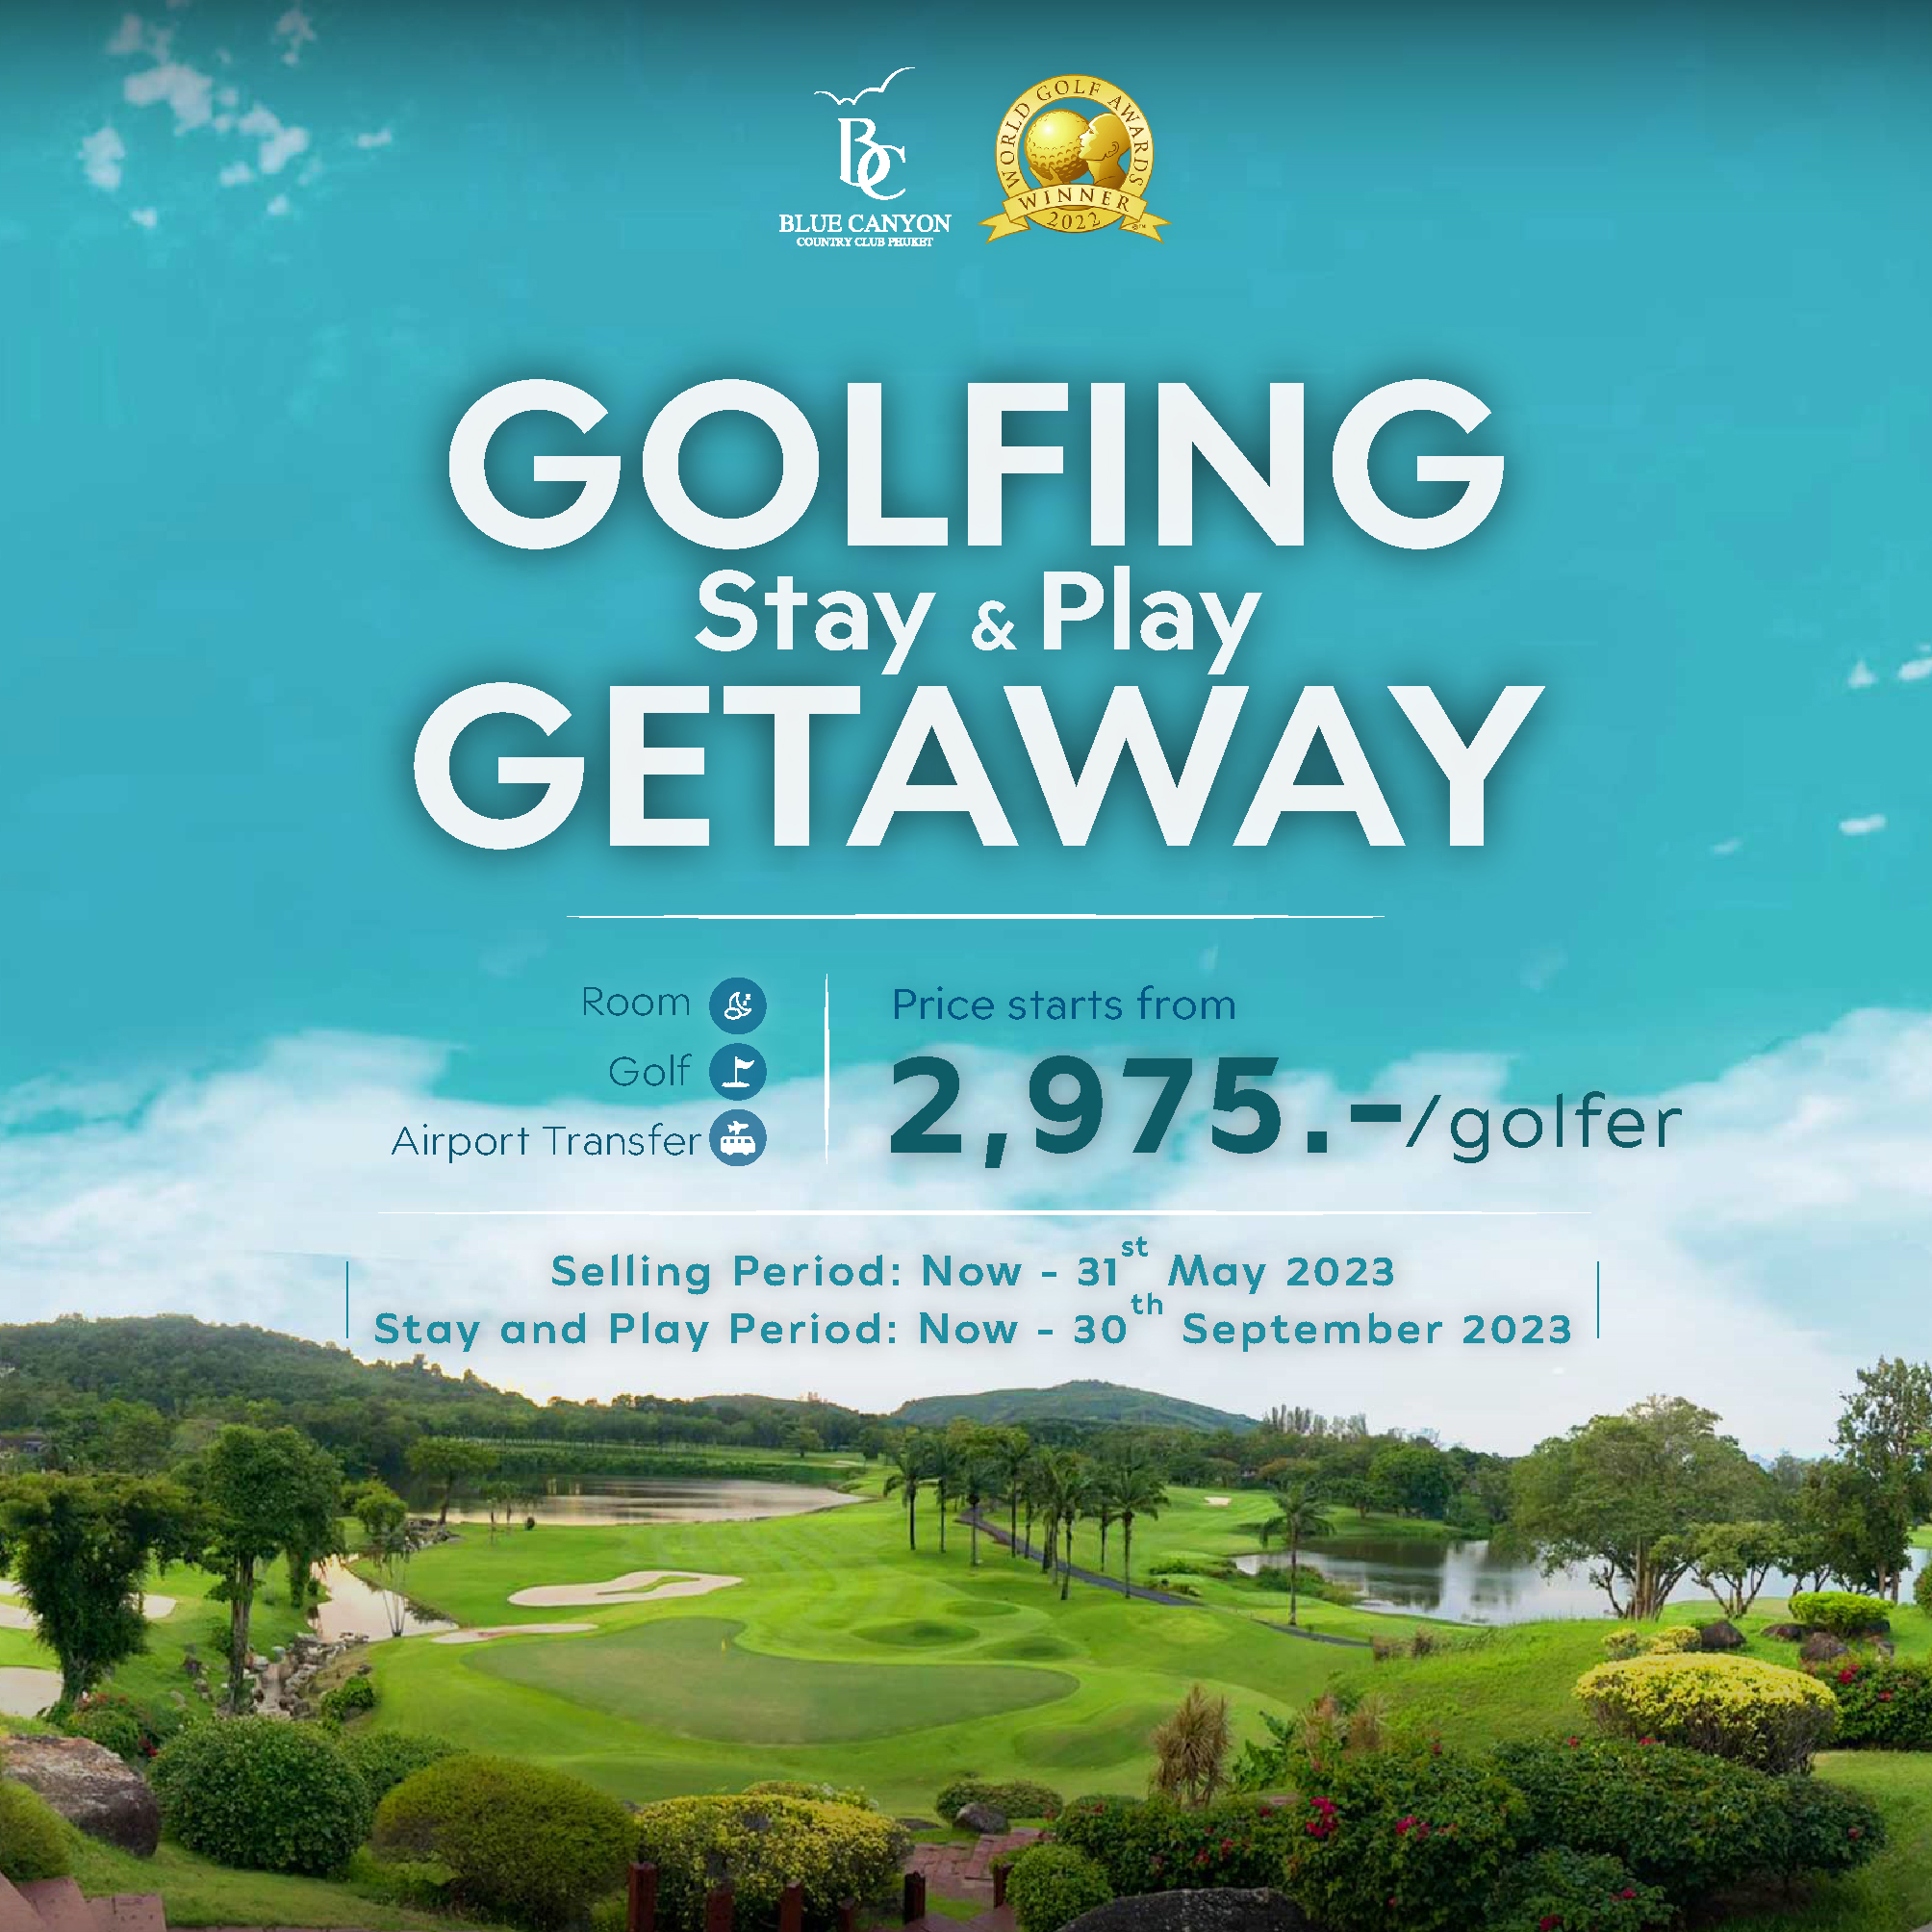 Golfing Getaway - Stay & Play